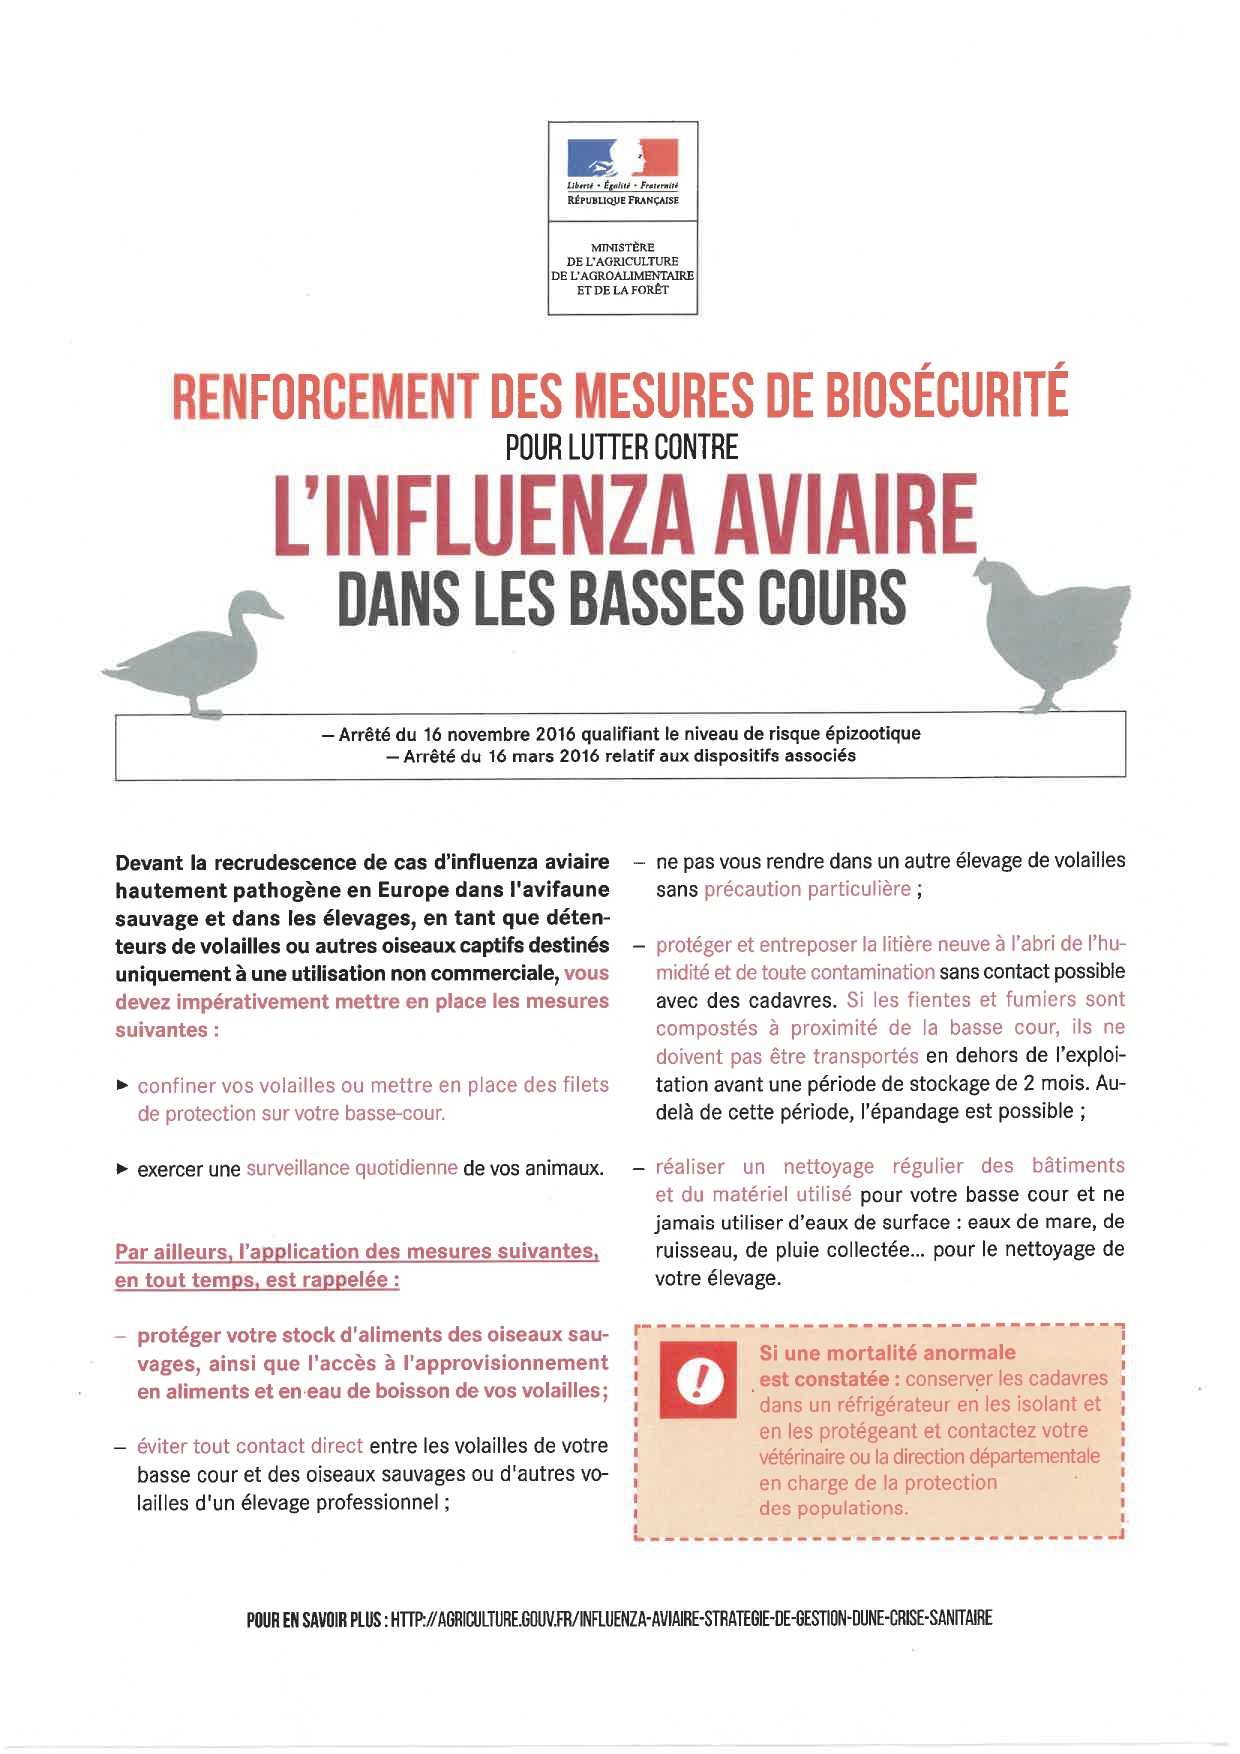 Prévention influenza aviaire-25 mars 22_page-0005.jpg